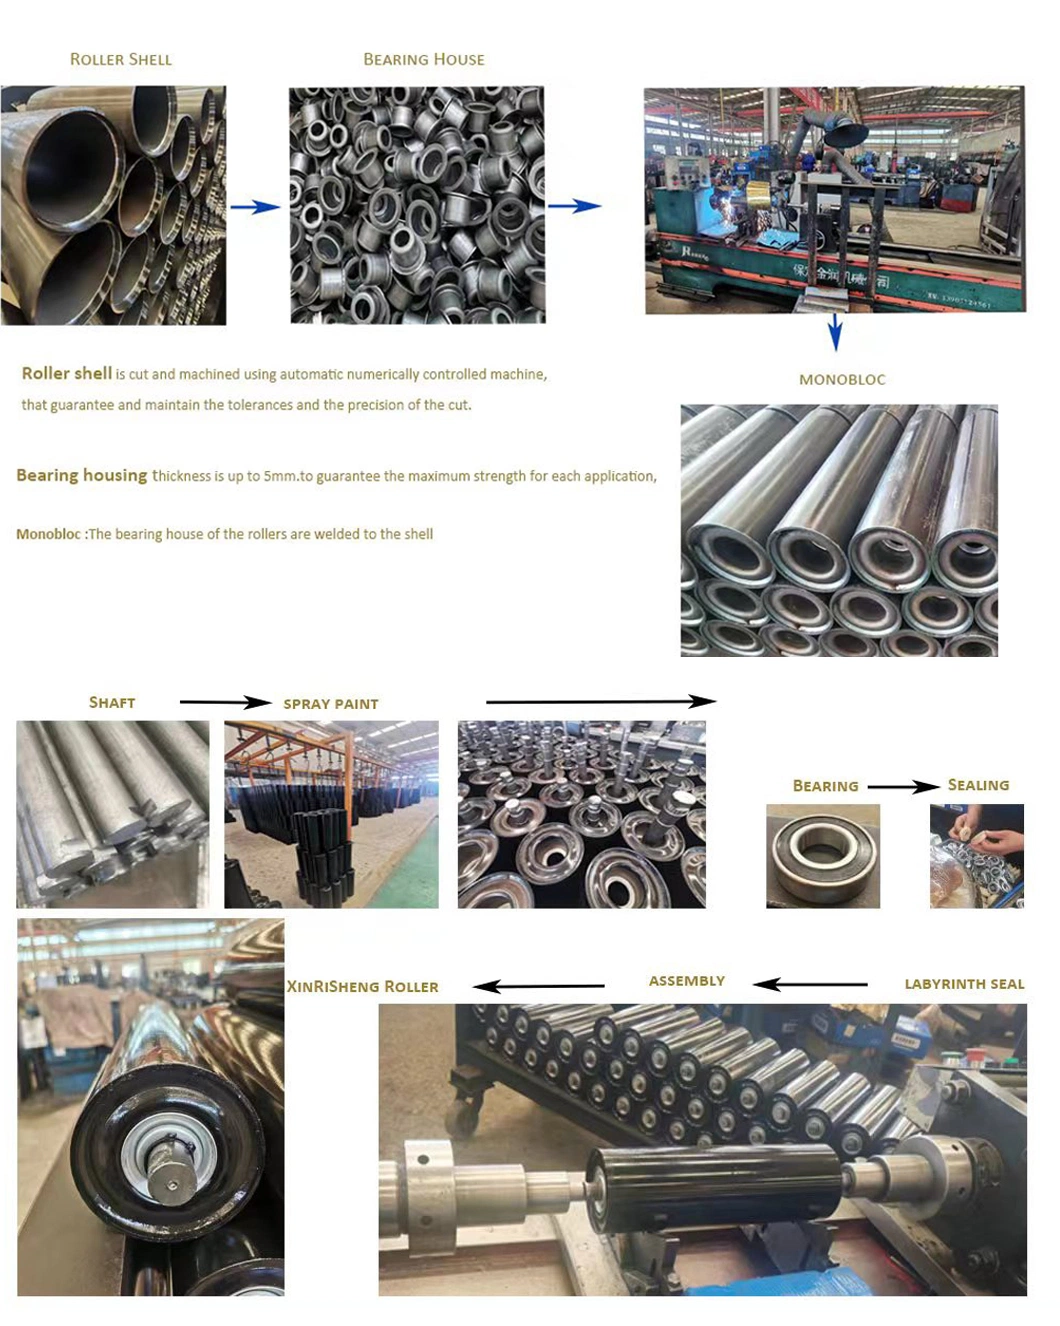 Return Spiral Roller of High Quality Belt Conveyor Equipment